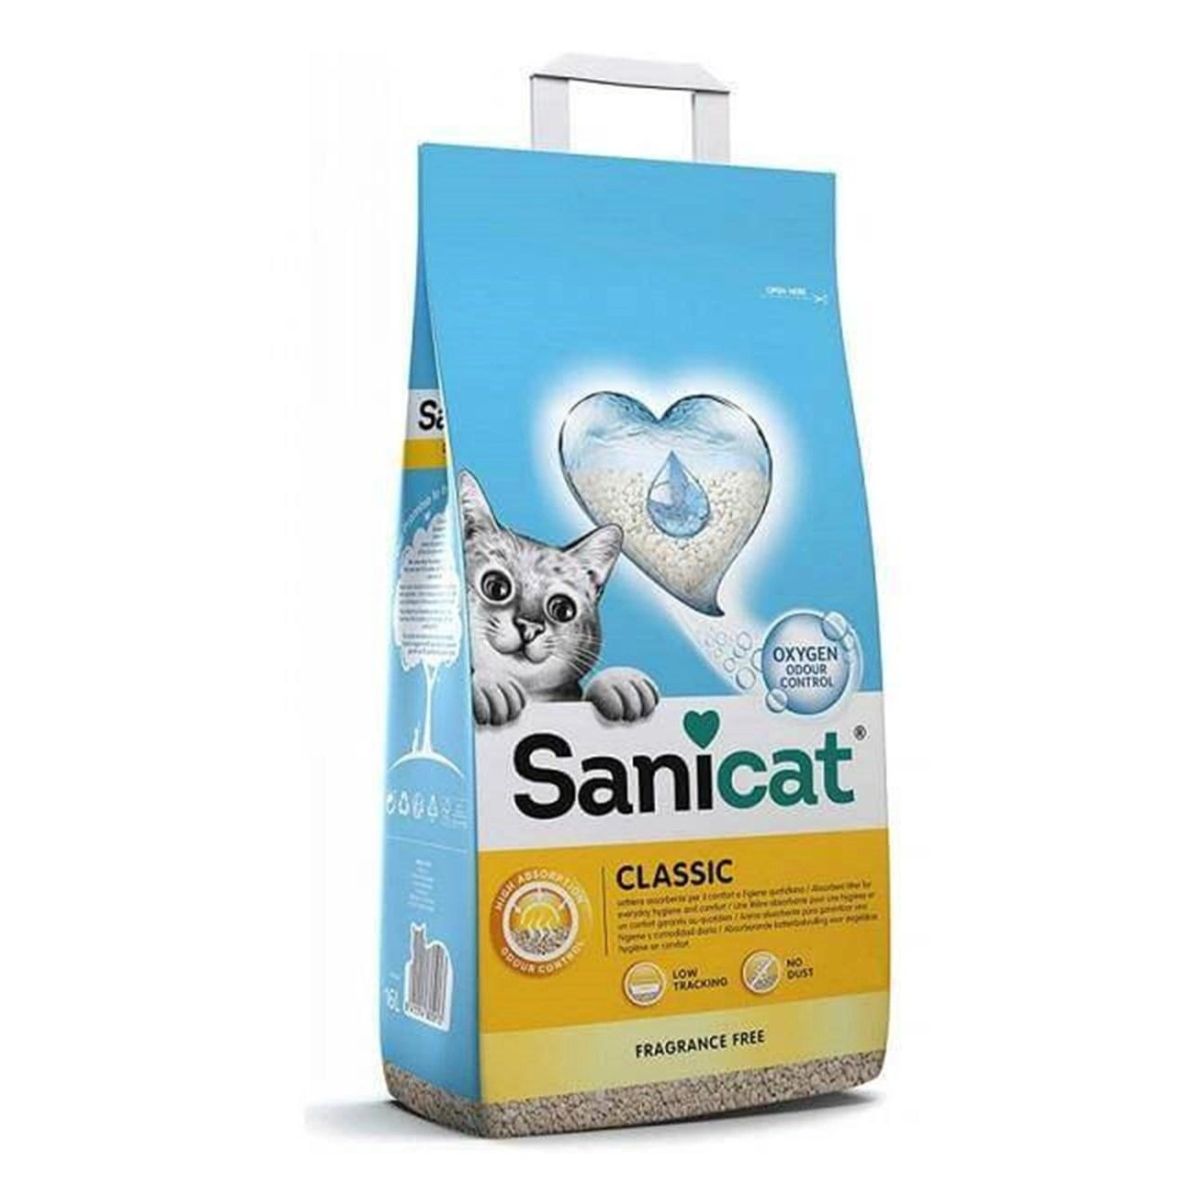 A bag of Sanicat - Classic Unscented Cat Litter - 10L.